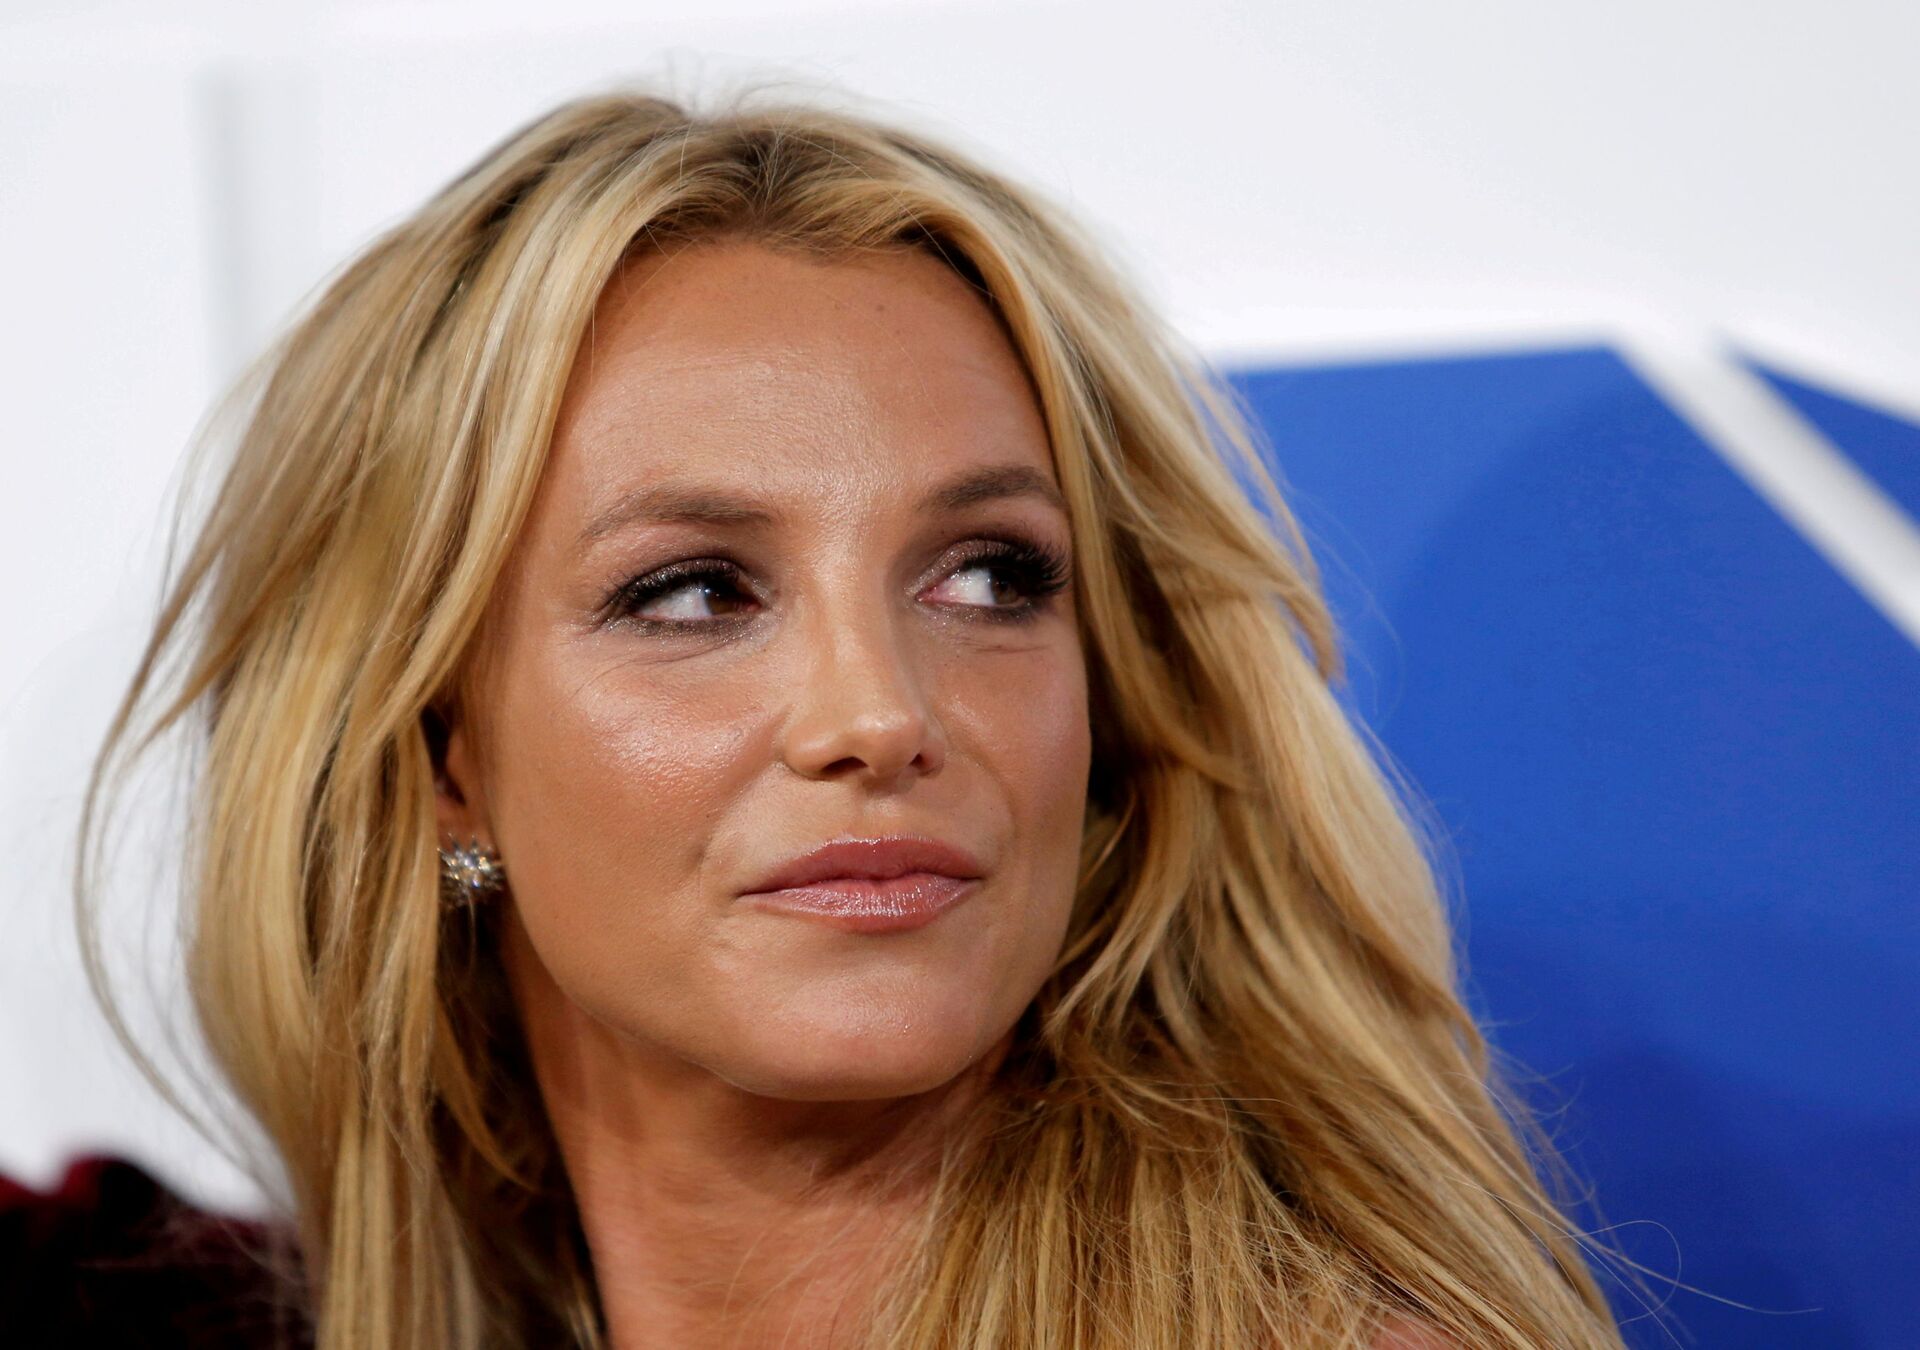 Iconic Singer Britney Spears Asks Court to End 13-Year Long Father's Conservatorship - Sputnik International, 1920, 23.06.2021